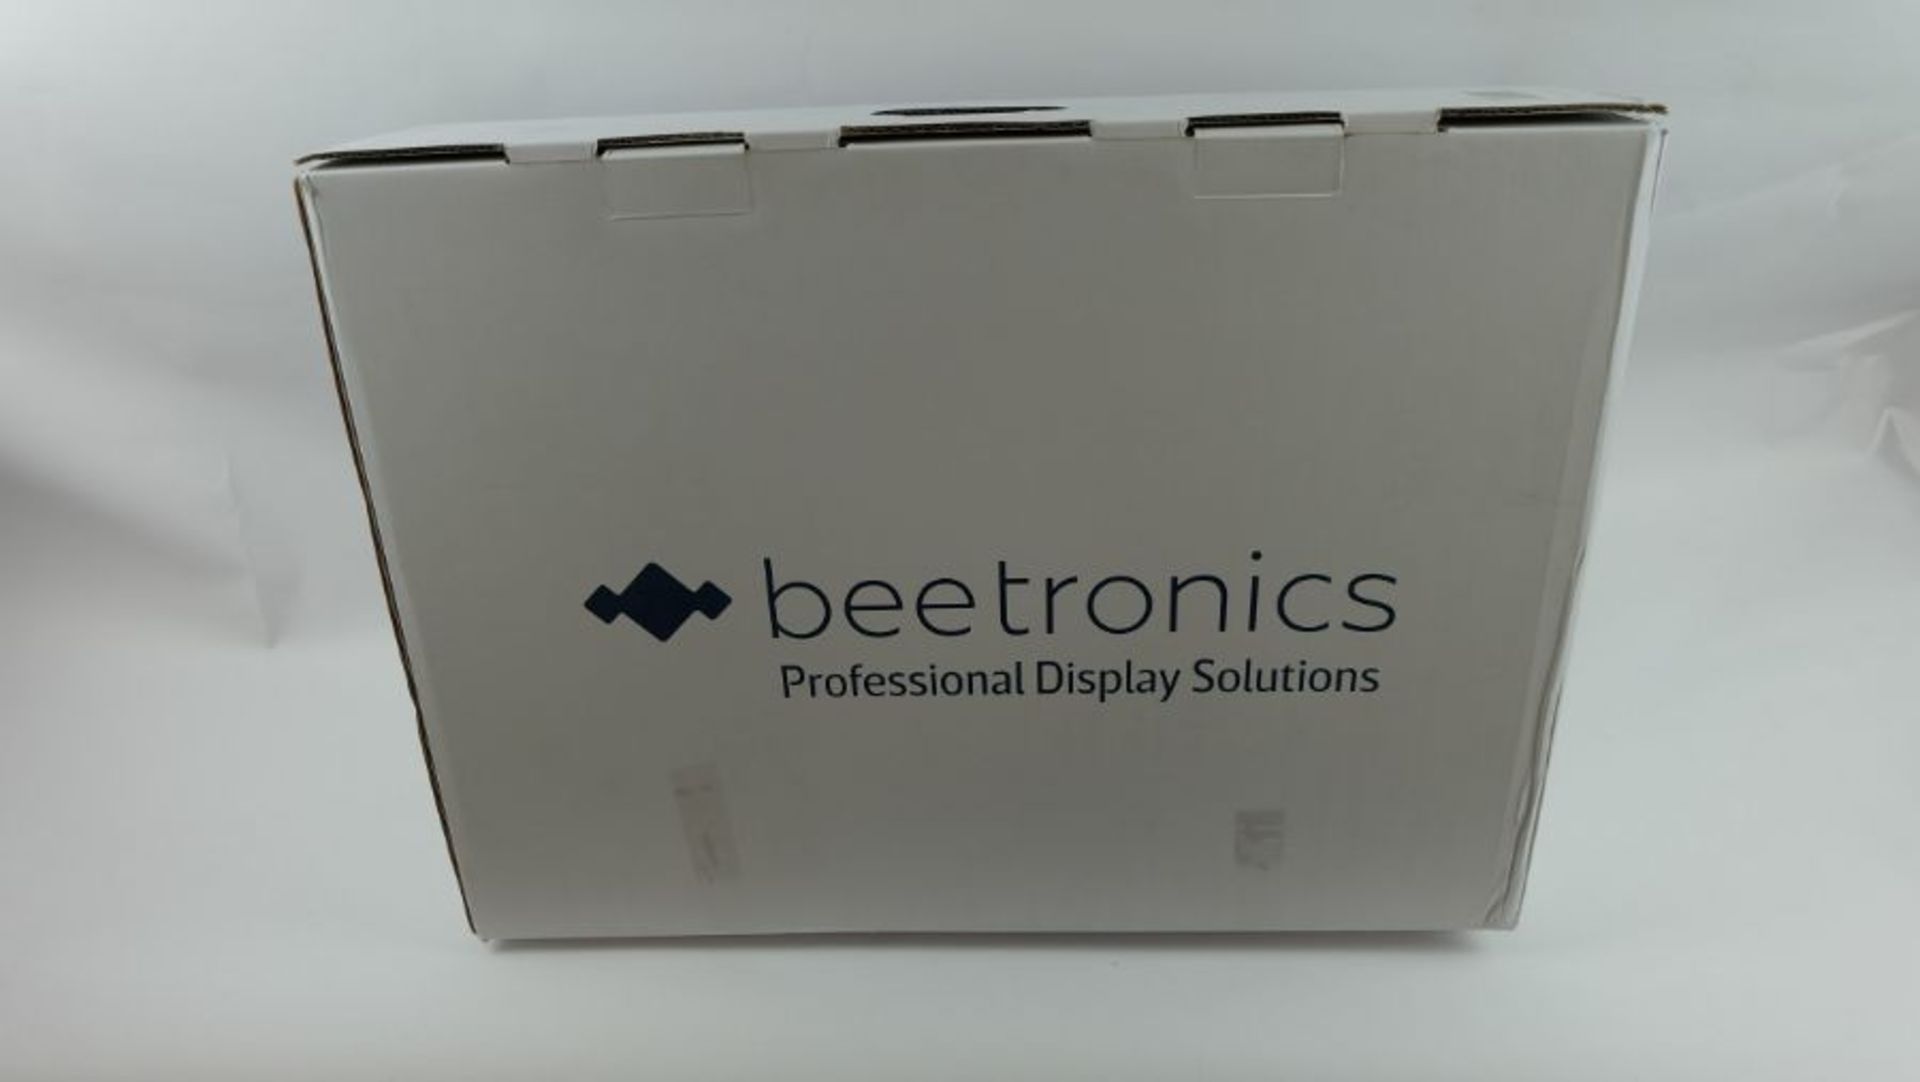 Beetronics 19 inch monitor BEE-19VG7M. - Image 2 of 2